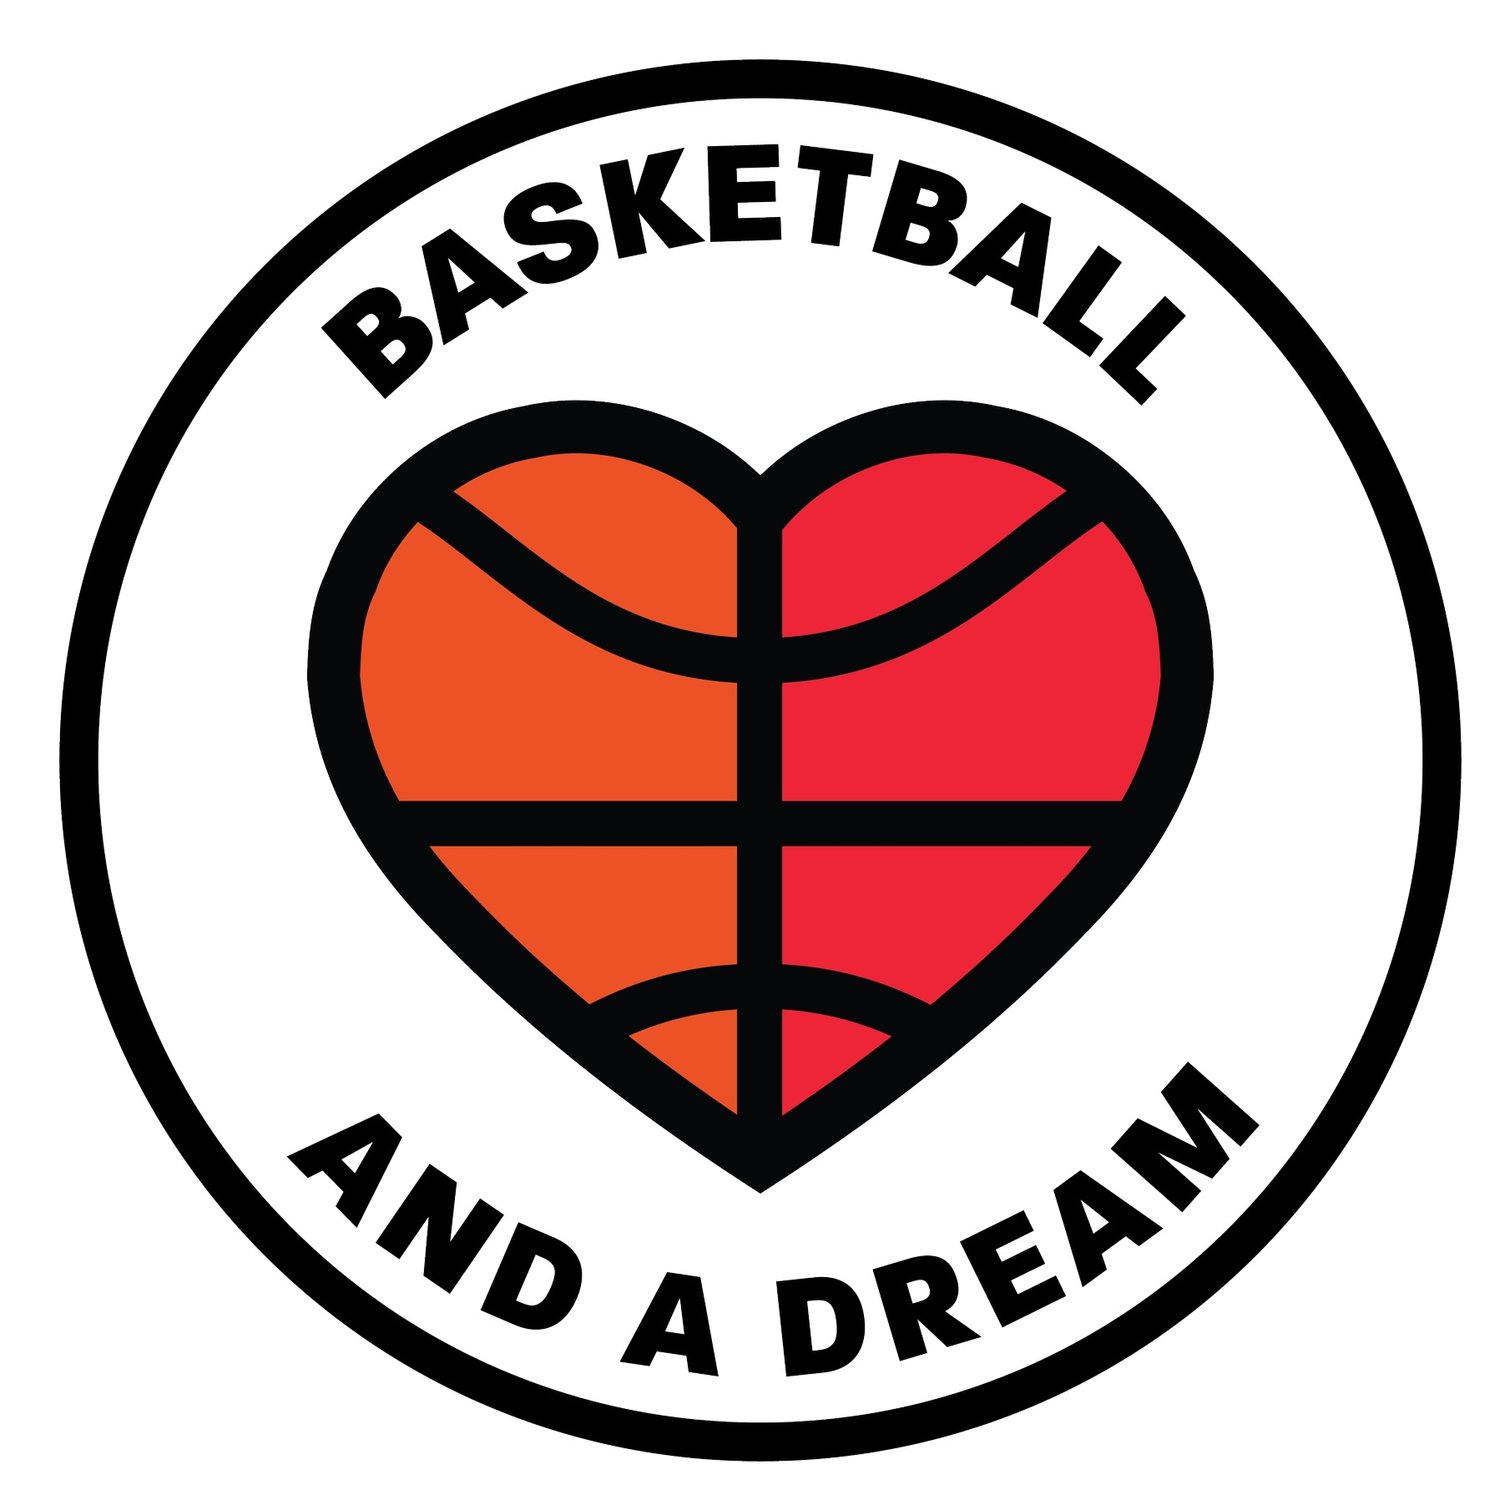 Basketball and a dream foundation